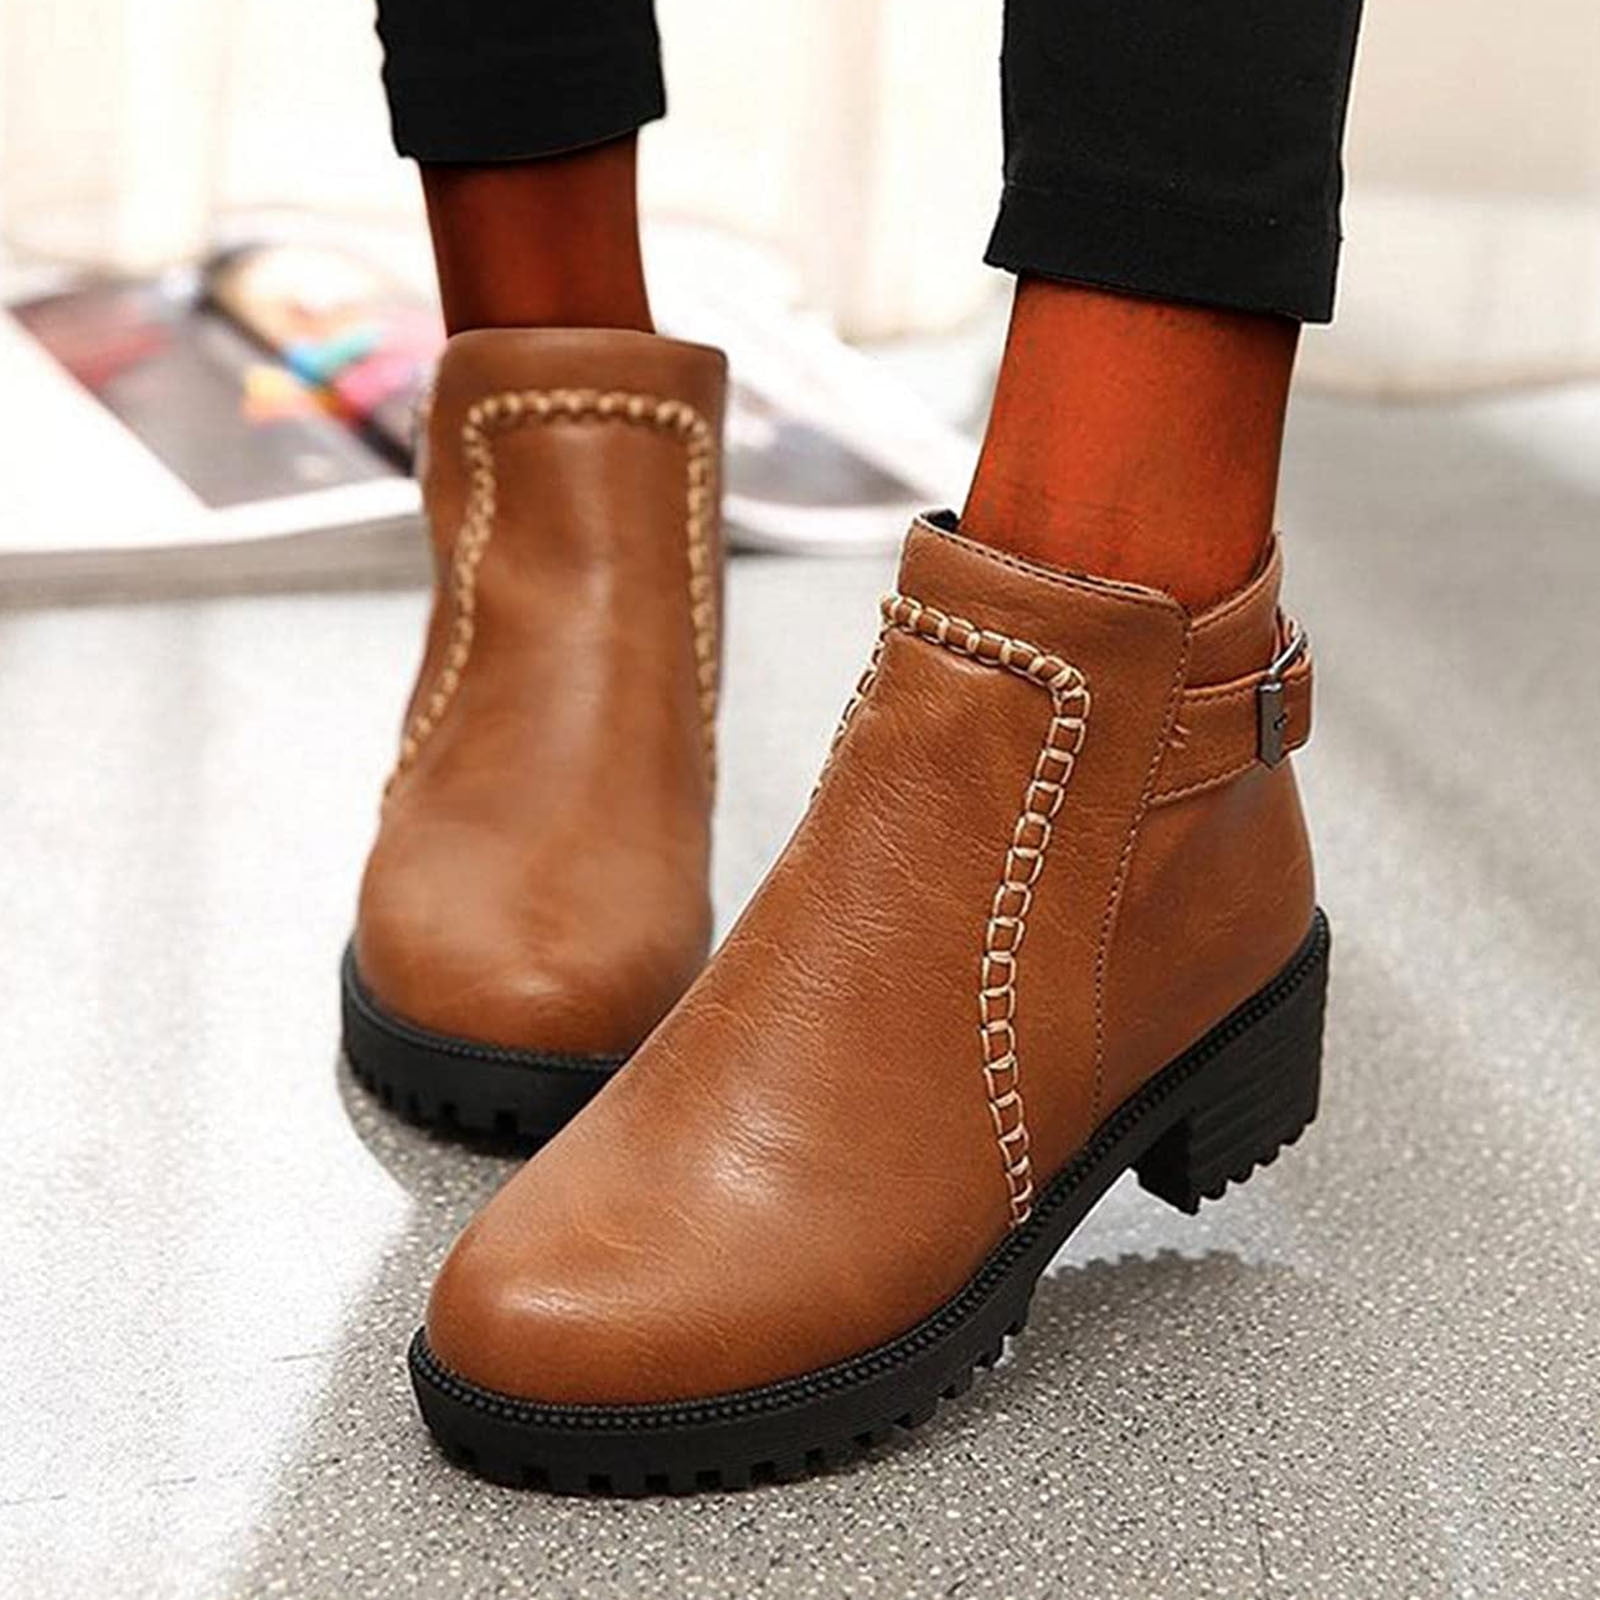 comfortable dress boots women’s